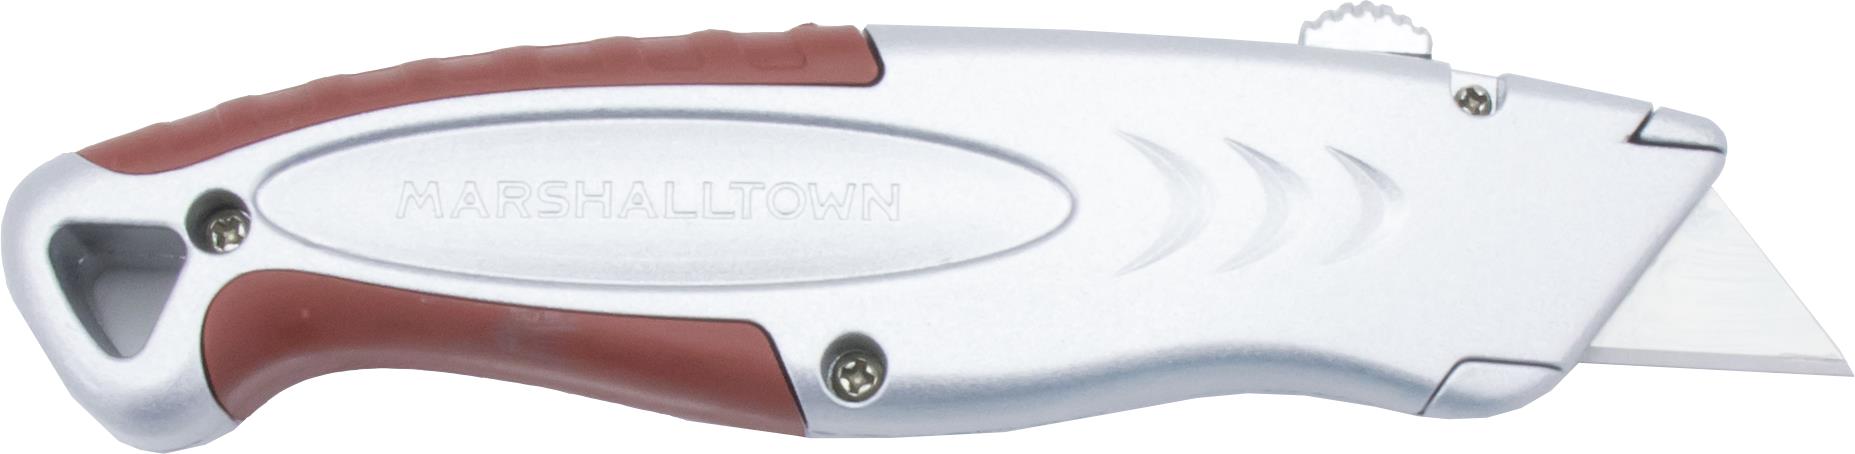 Marshalltown 28241 Drywall Durasoft Utility Knife With Slide